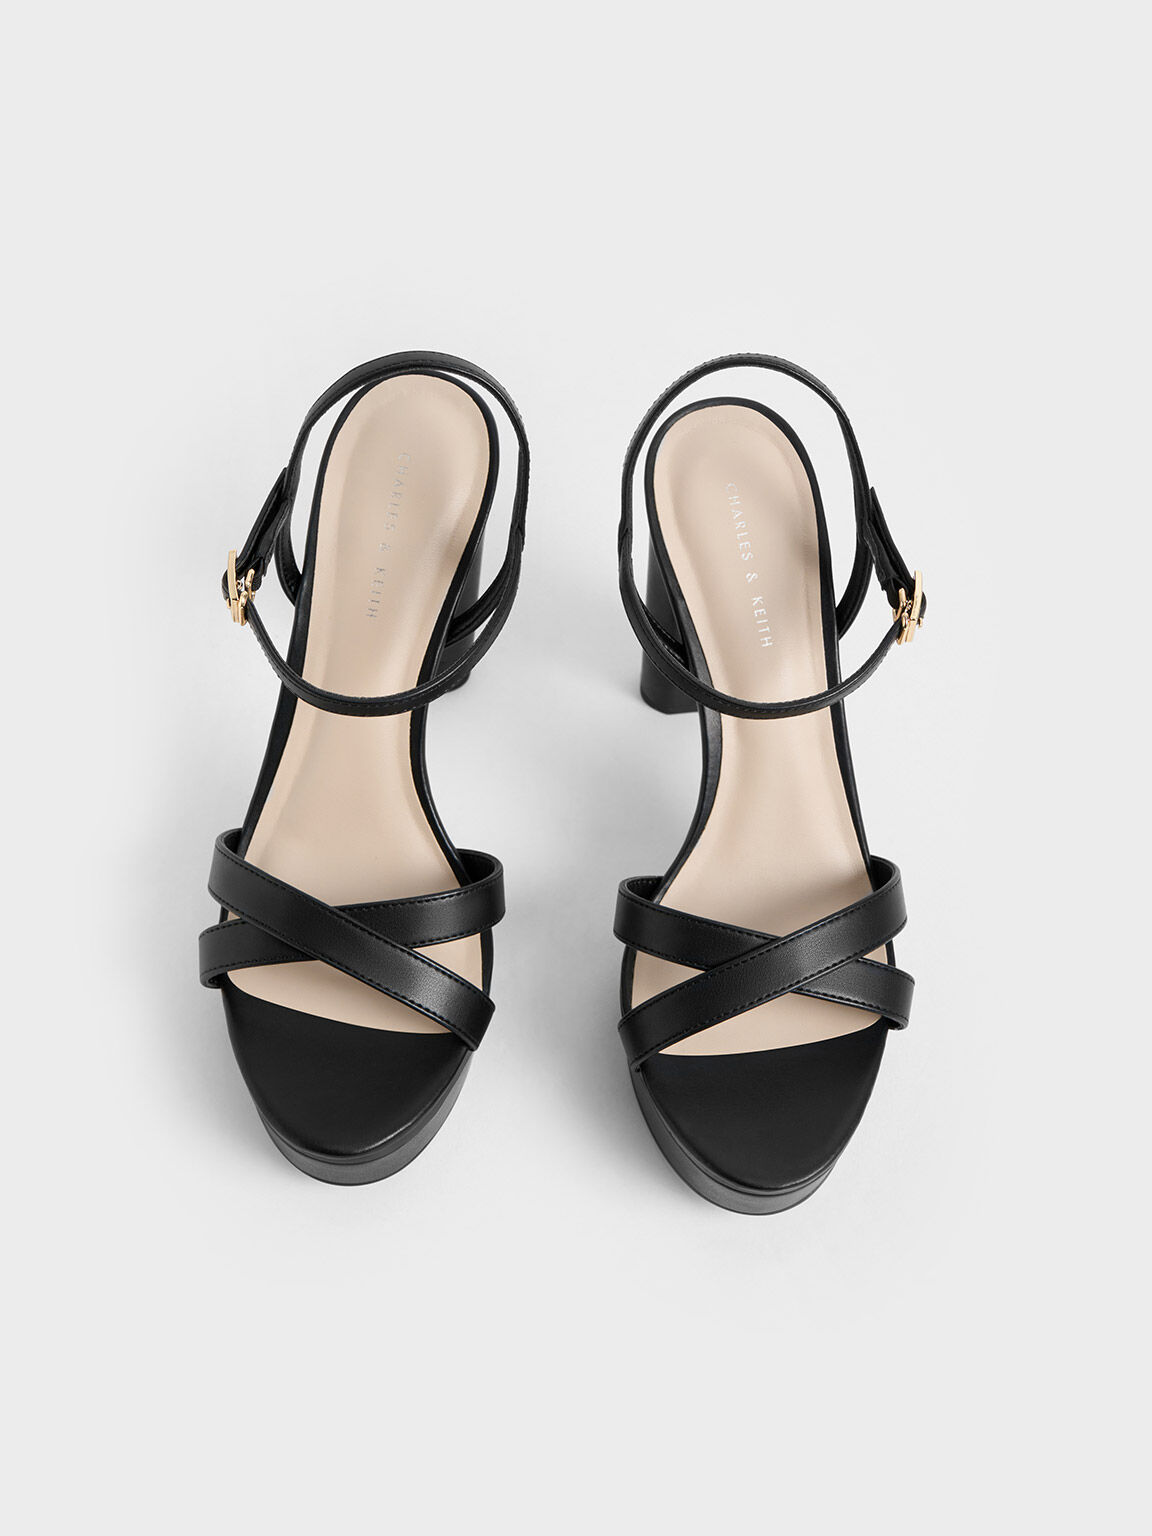 36 Hottest Black Strappy Heels Designs | Black high heels, High heels  stilettos, Womens high heels